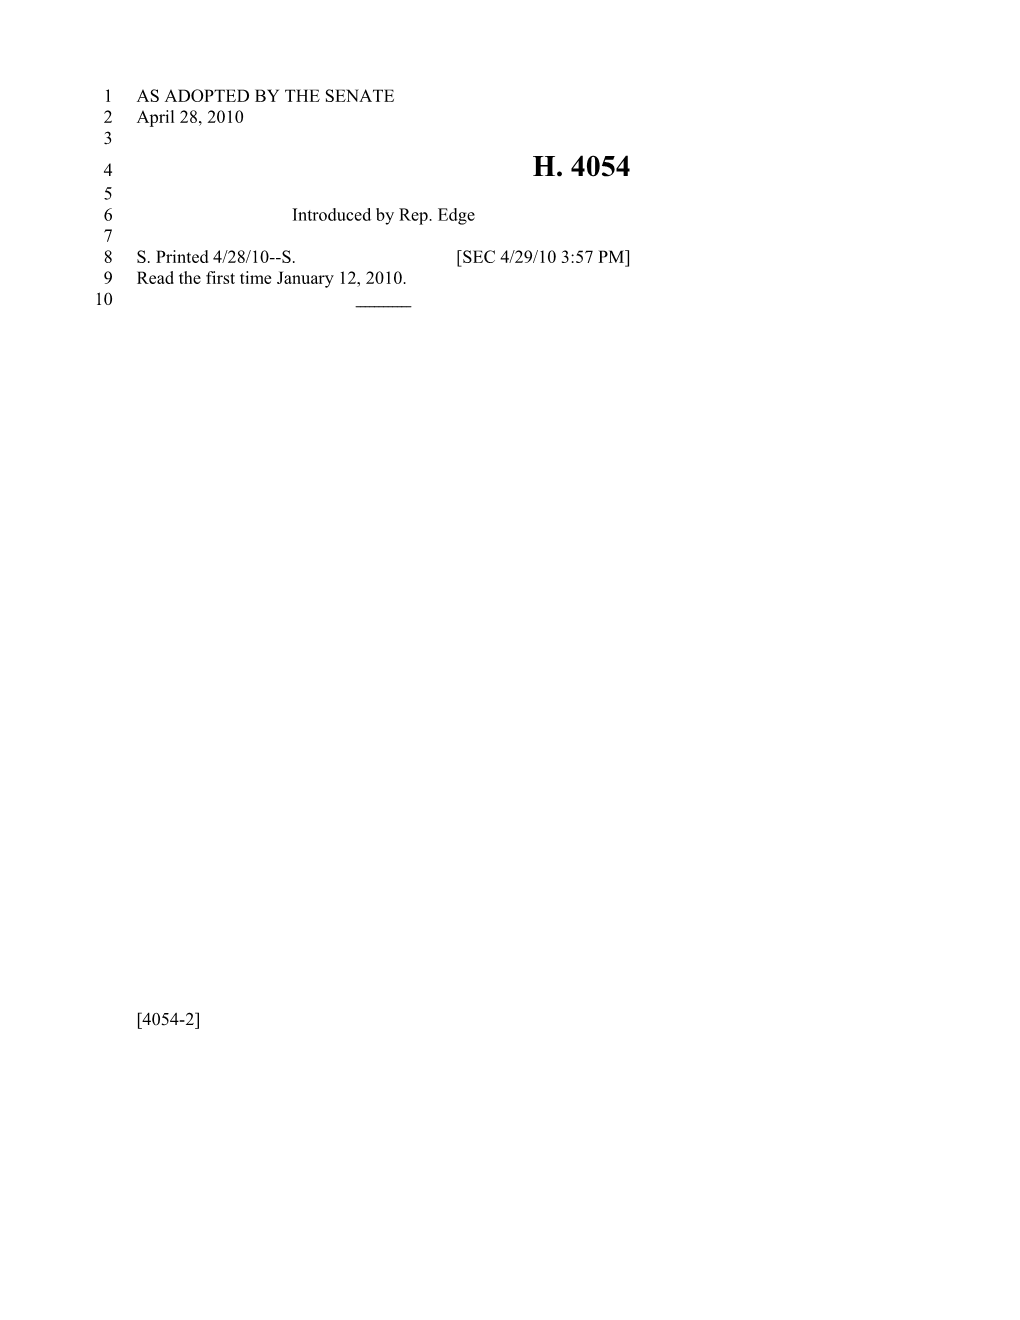 2009-2010 Bill 4054: Adolescent Well Physicals - South Carolina Legislature Online